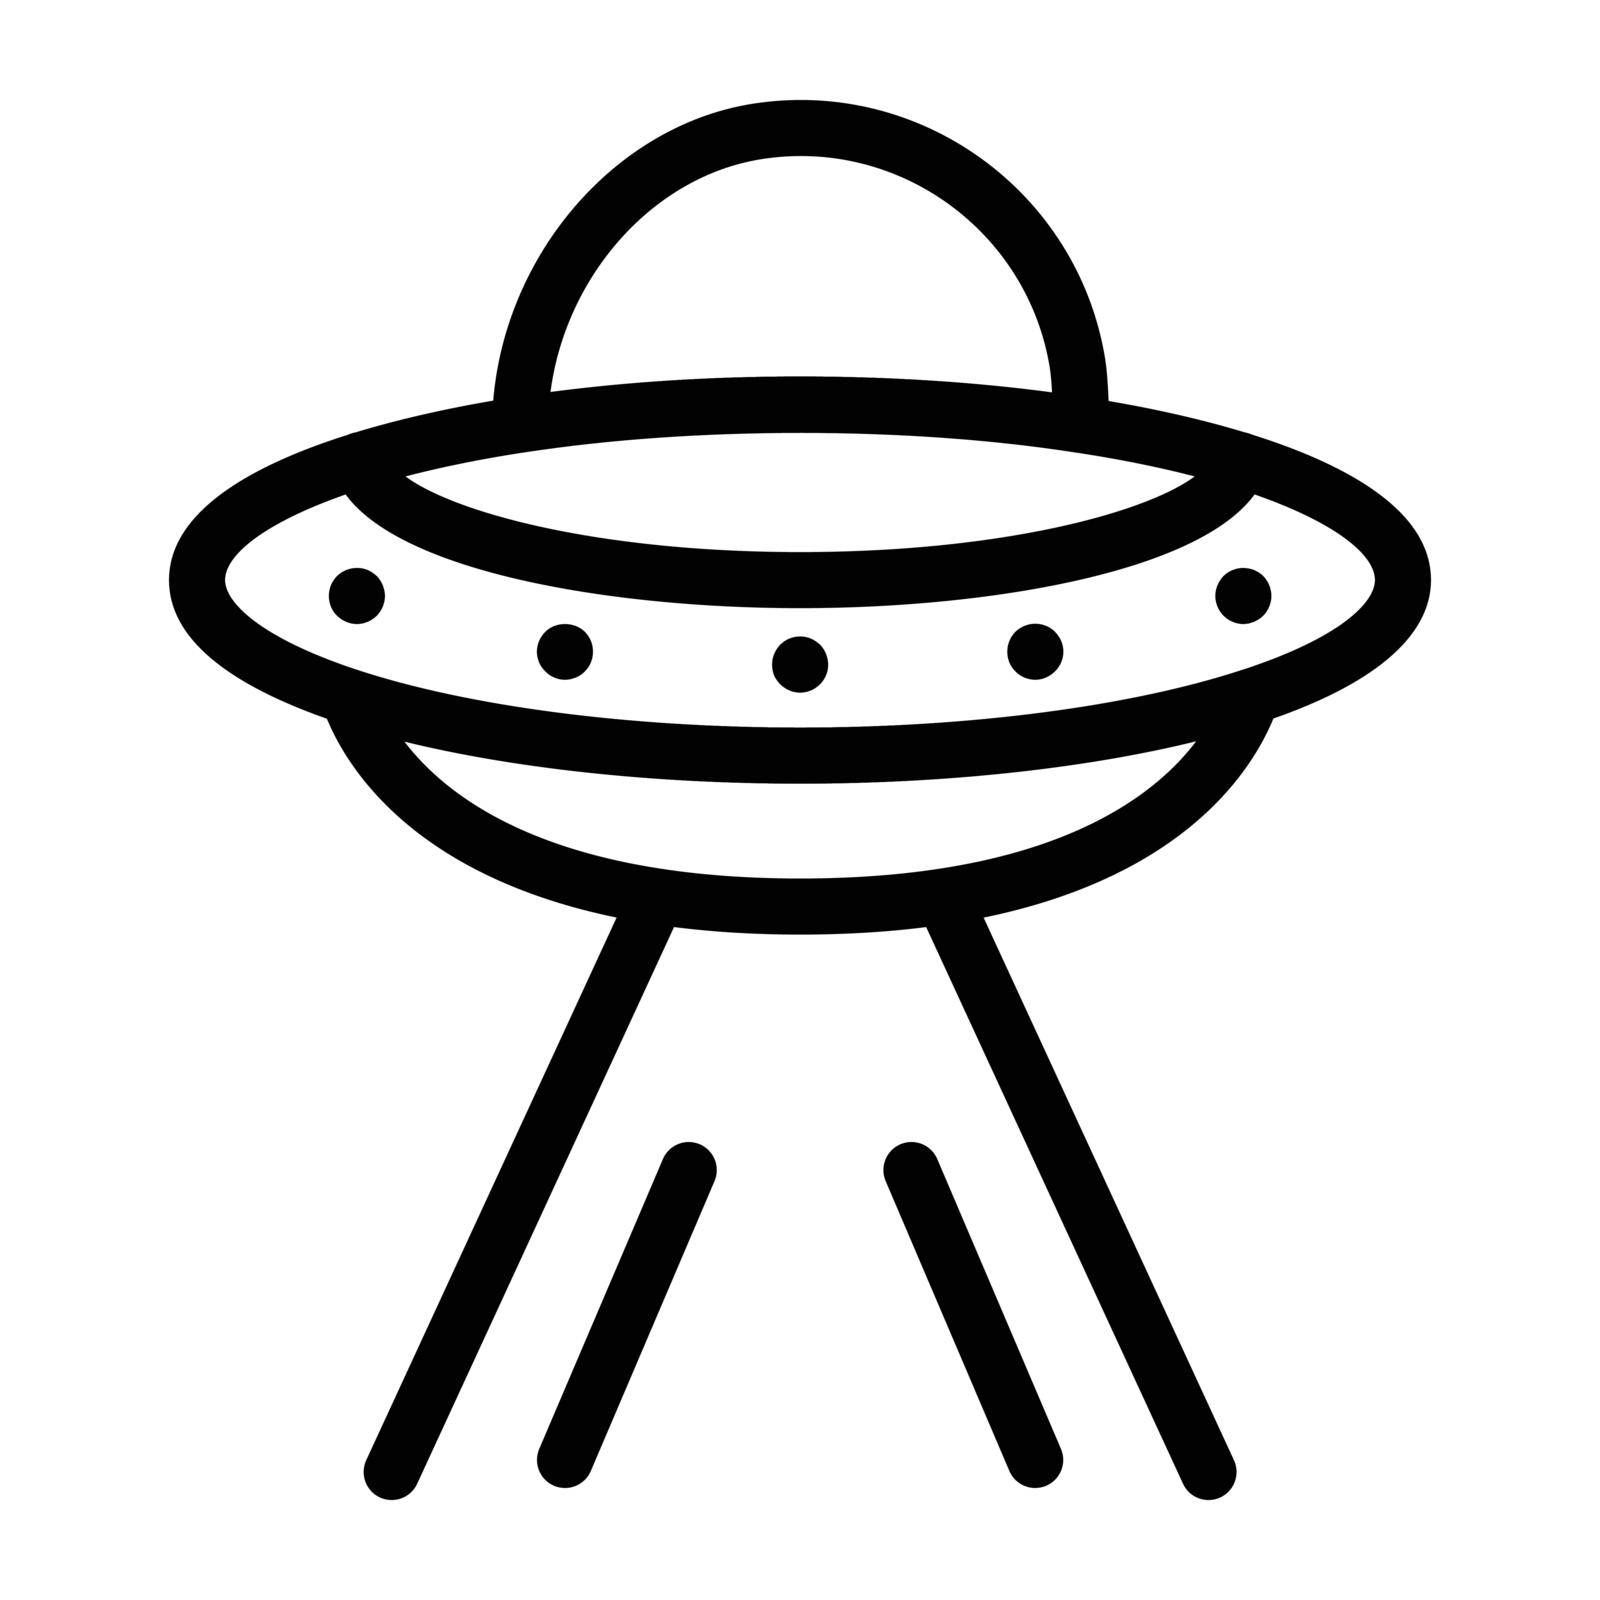 UFO by FlaticonsDesign